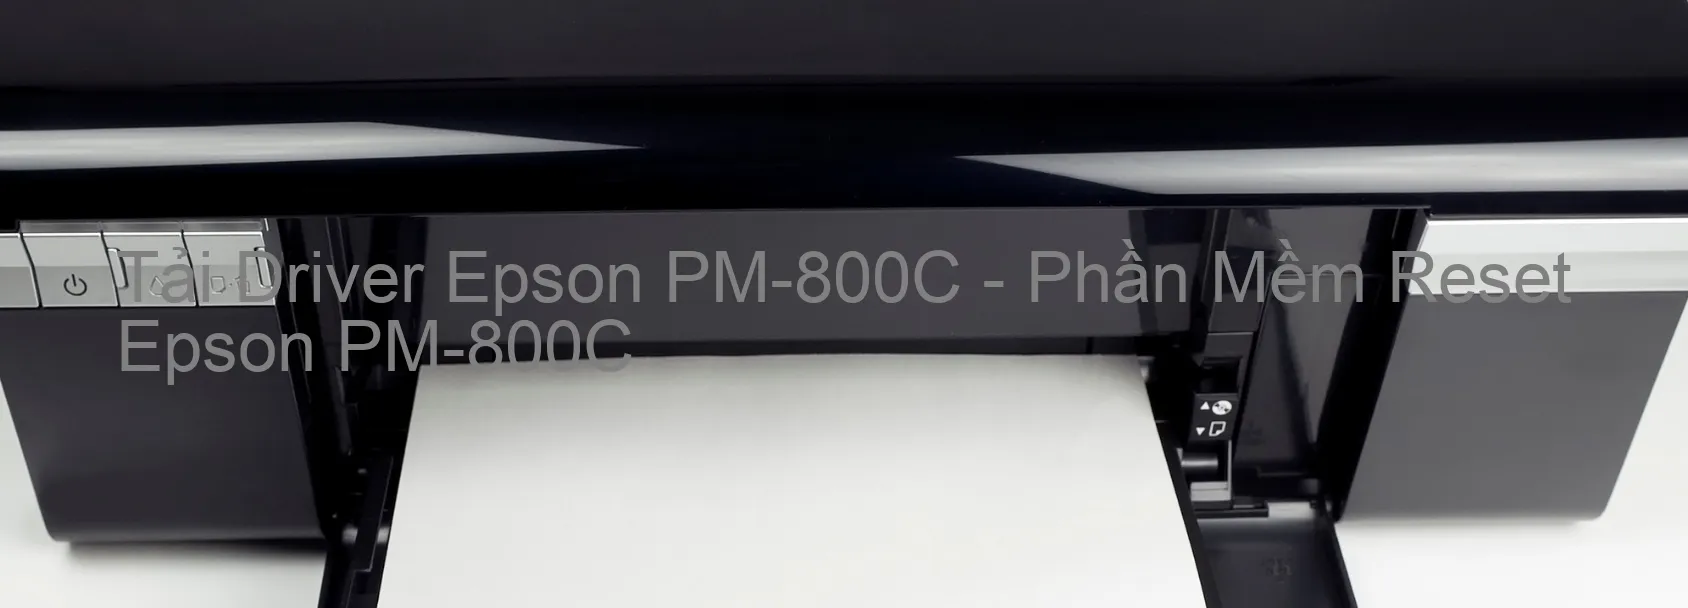 Driver Epson PM-800C, Phần Mềm Reset Epson PM-800C